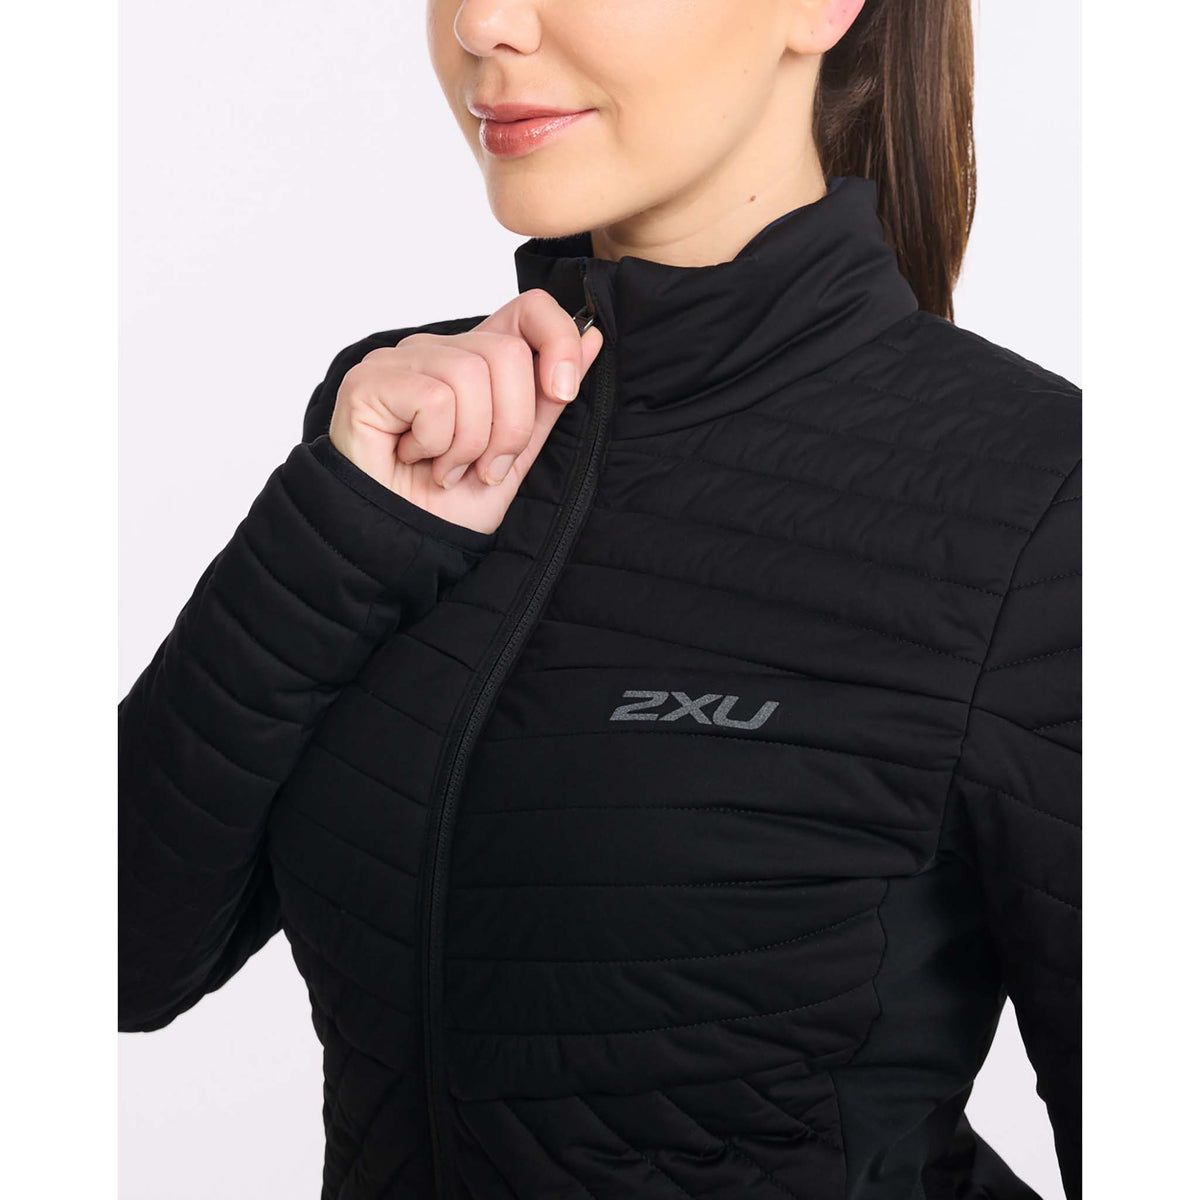 2XU Ignition Insulation Jacket manteau réversible black turbulence pour femme zip